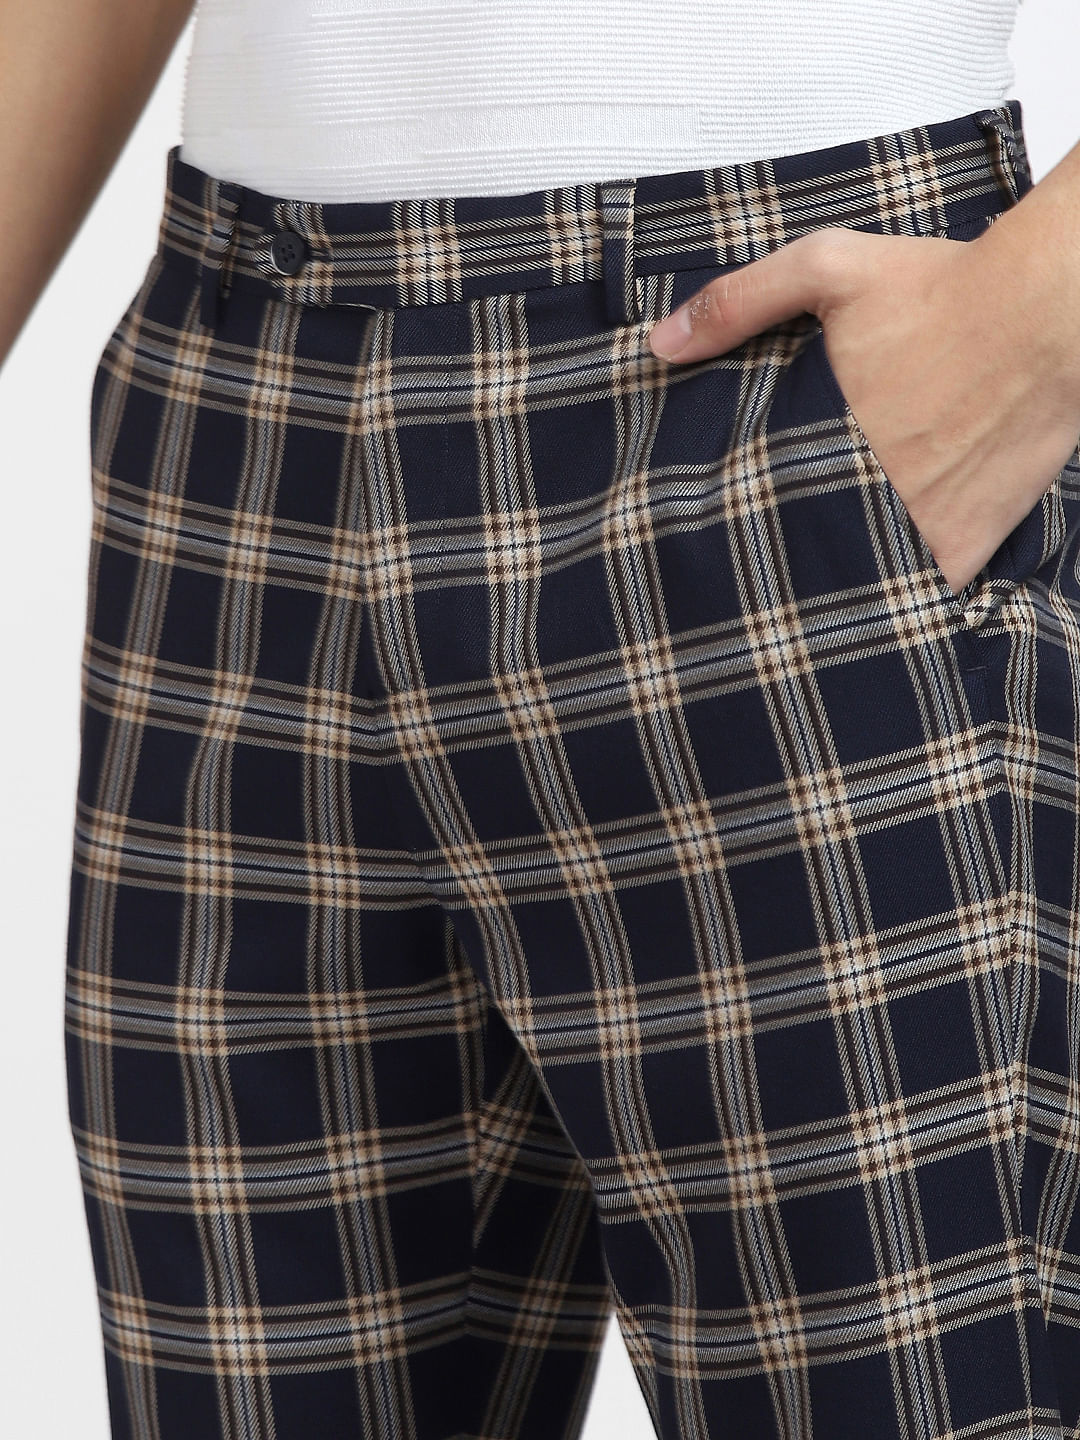 Buy Niheers Slim Fit Checks Trousers  Slim fit Casual Trousers for Men  Casual Pants for Men  Beige Casual Checks Trouser Size28 at Amazonin